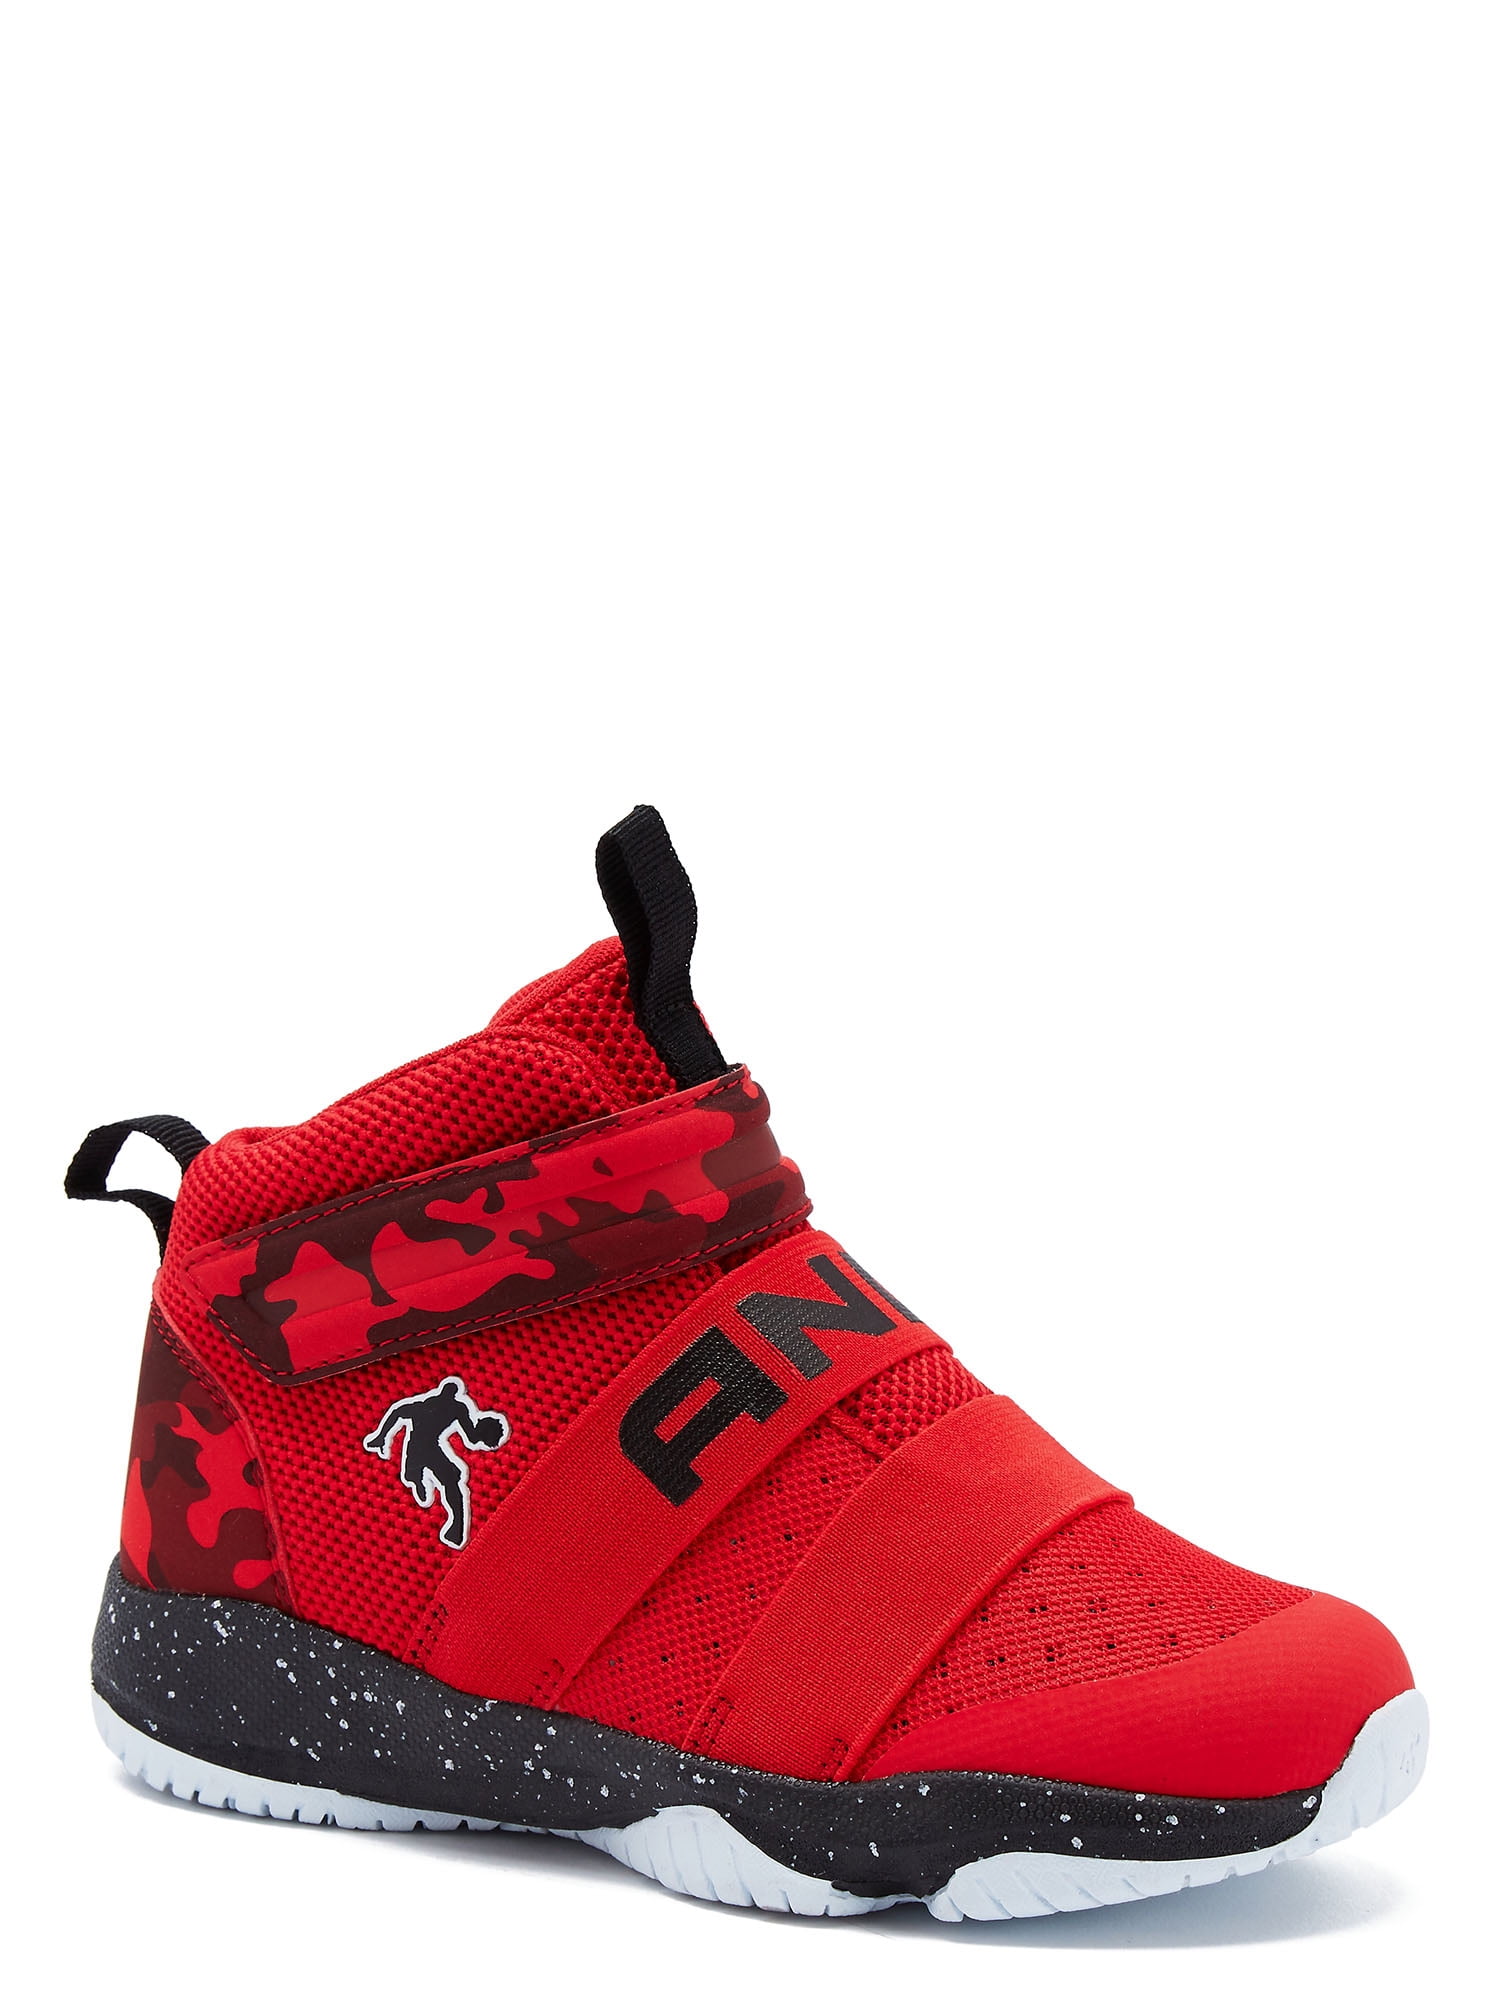 Nike Air Jordan 1 Golf Shoes | Where to Buy Online